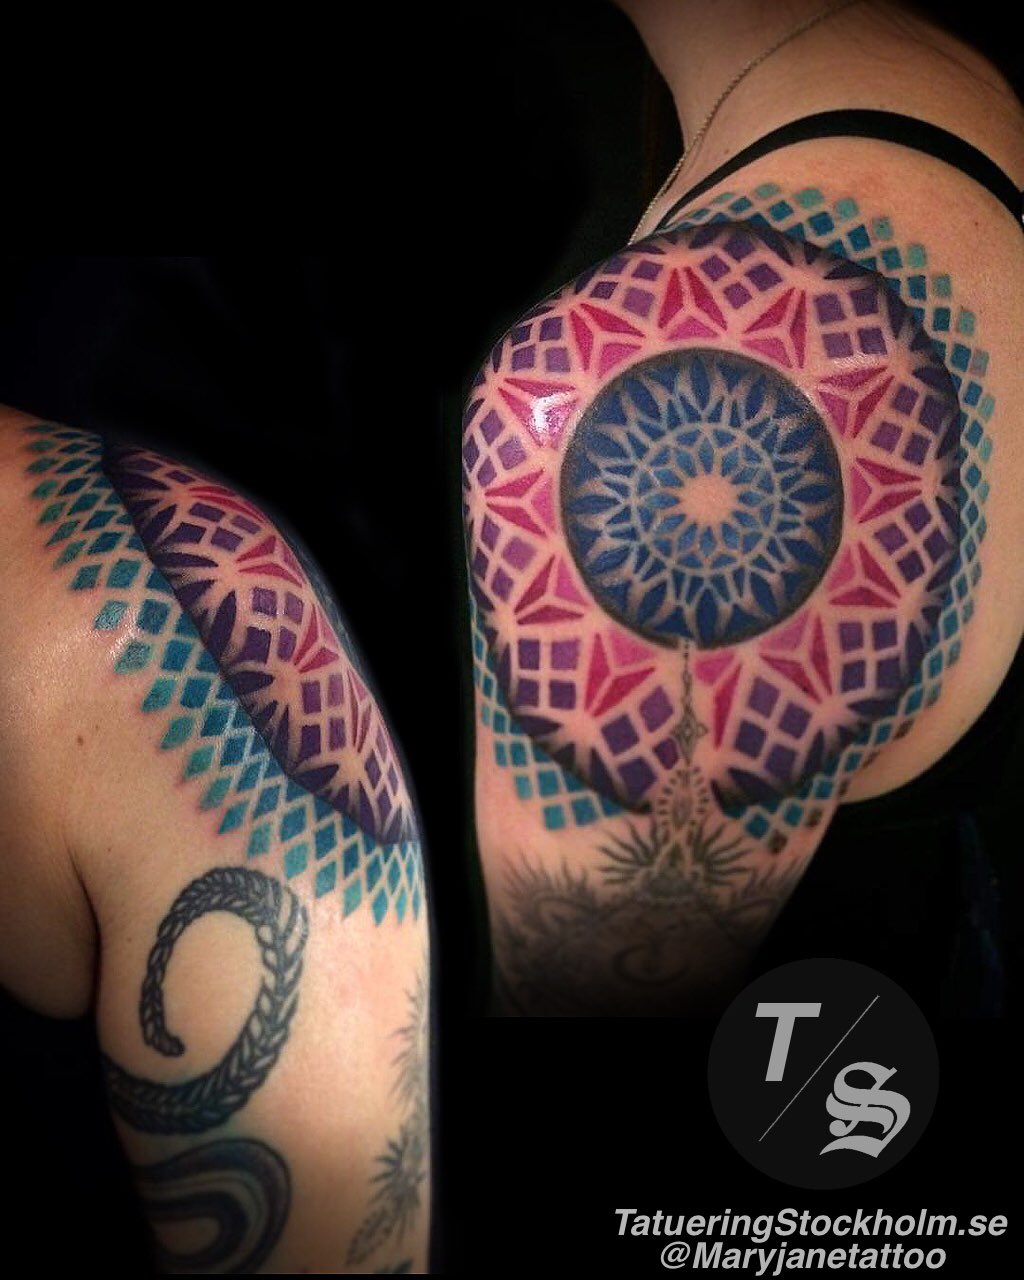 100 Intricate Geometric Tattoo Ideas | Art and Design